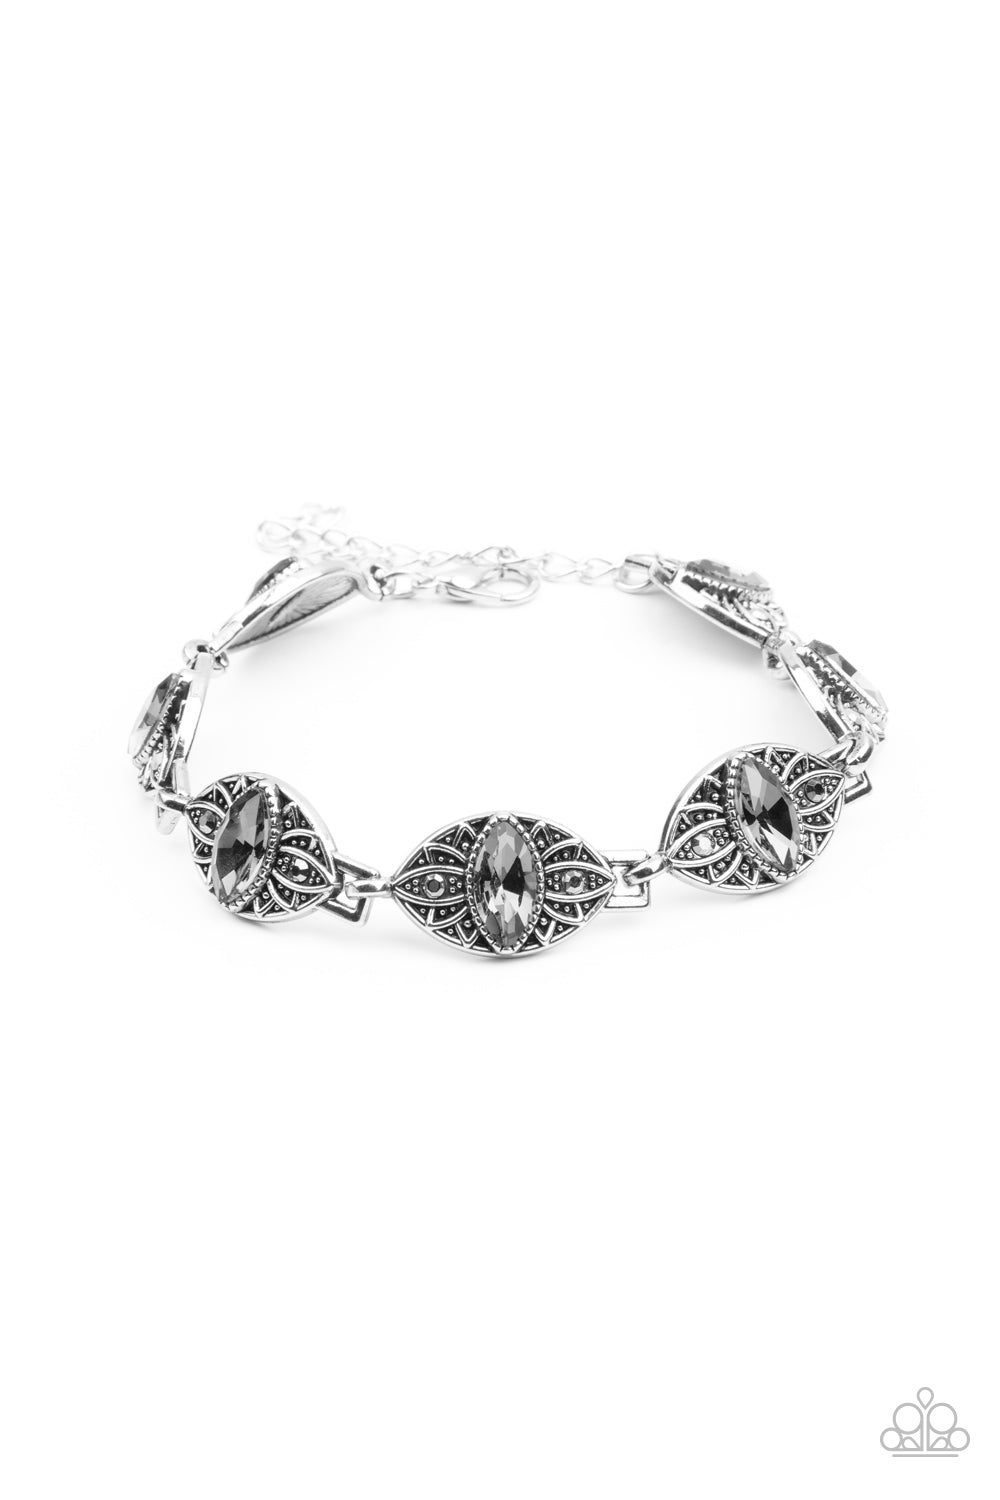 Crown Privilege Silver Bracelet